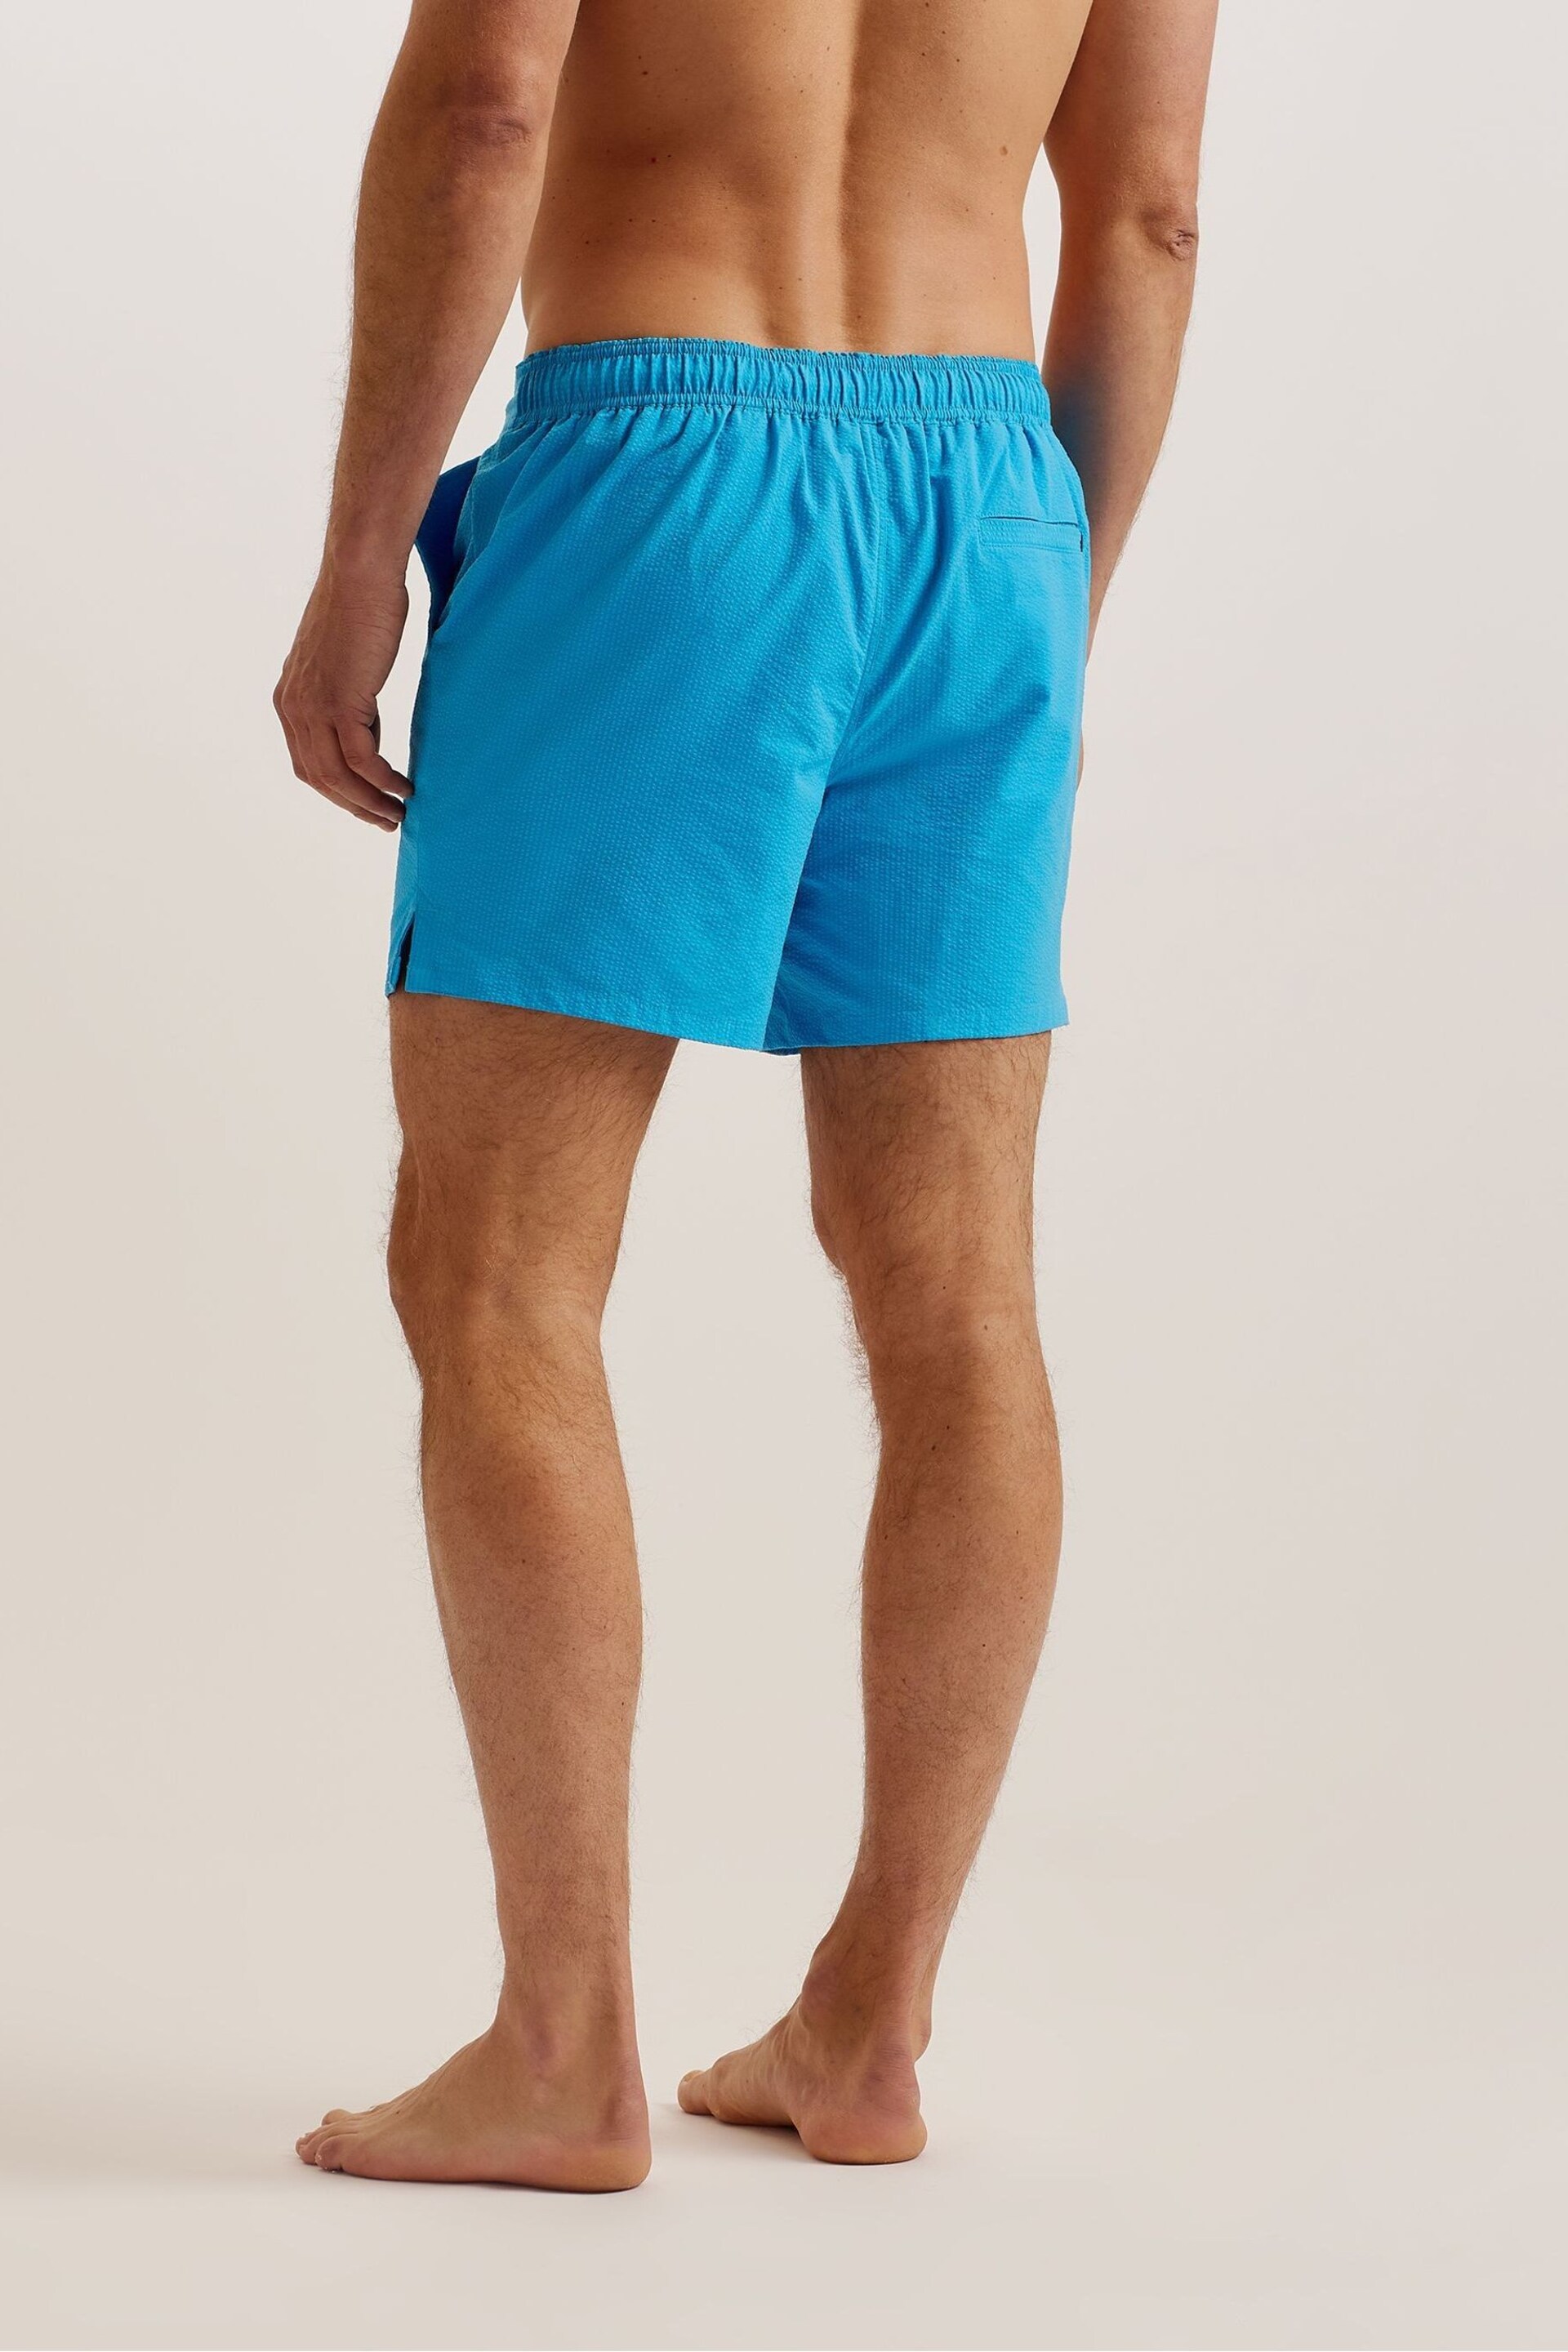 Ted Baker Blue Colne Plain Textured Swim Shorts - Image 2 of 6